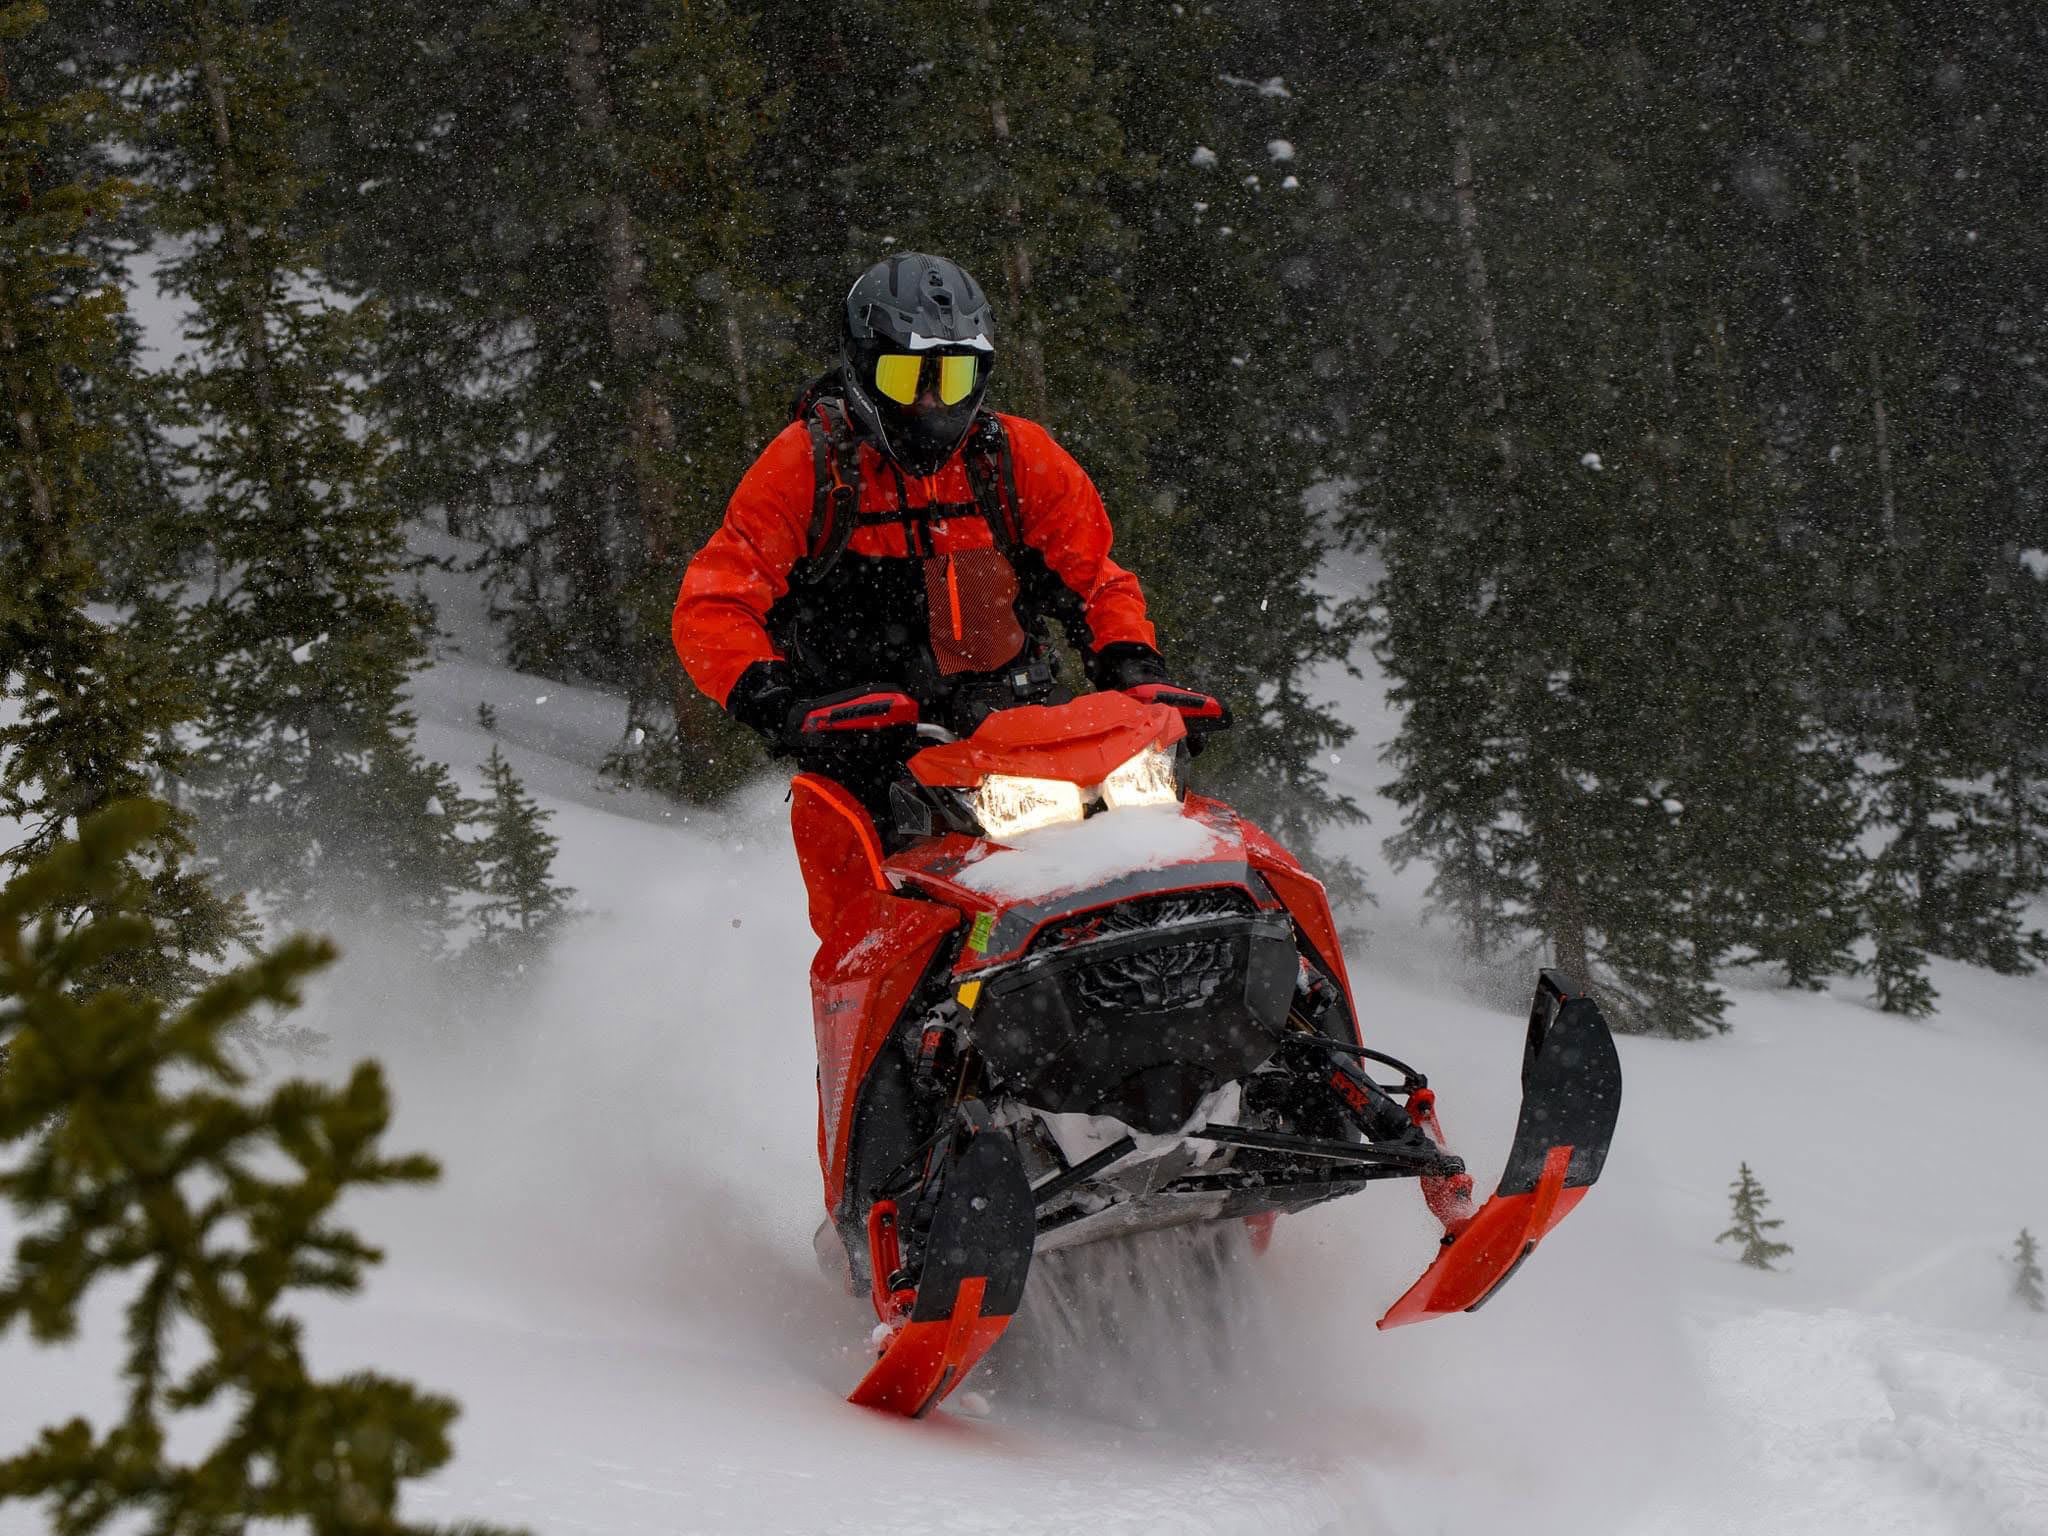 Amabassadeur Ski-Doo Troy Olesonen en excursion sur sa motoneige